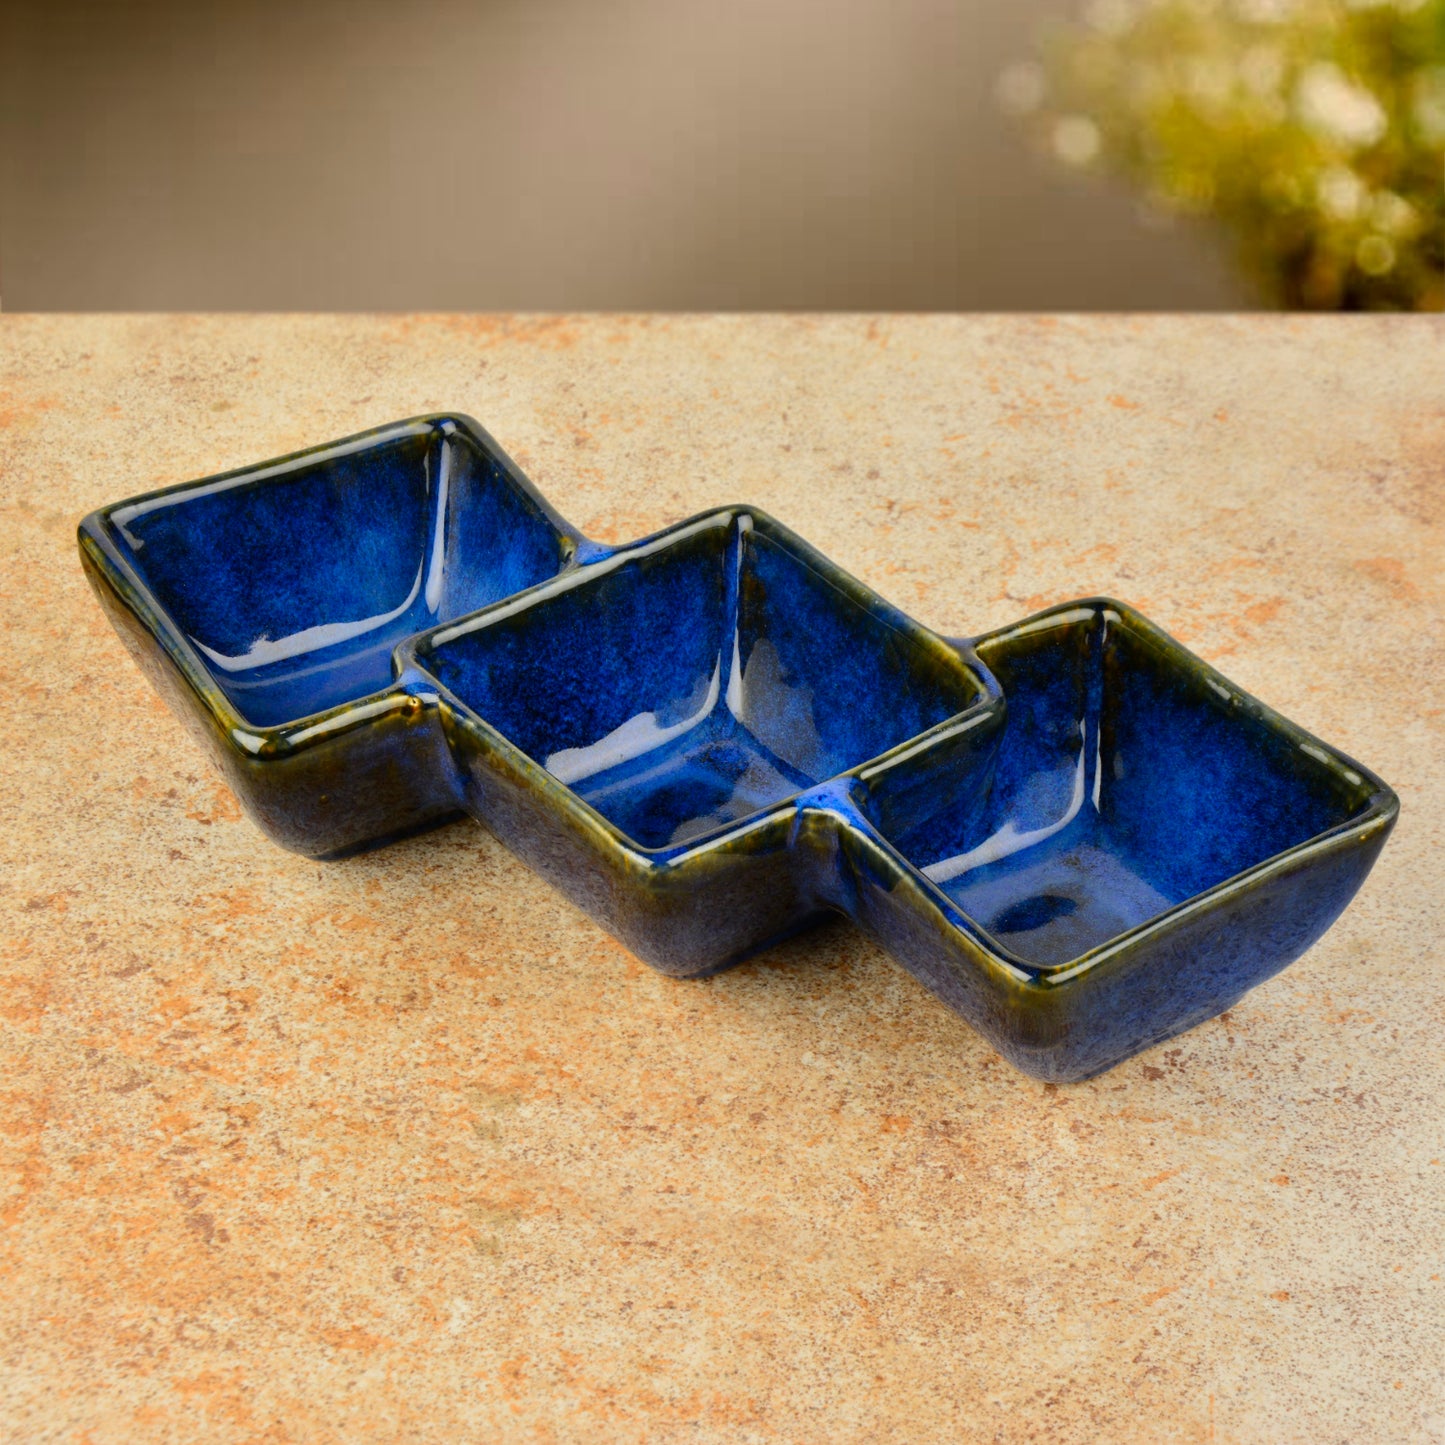 Studio Pottery Three Section Ceramic Serving Bowl (Blue, Length – 30 cm, Height – 5.5 cm, 500 ml)